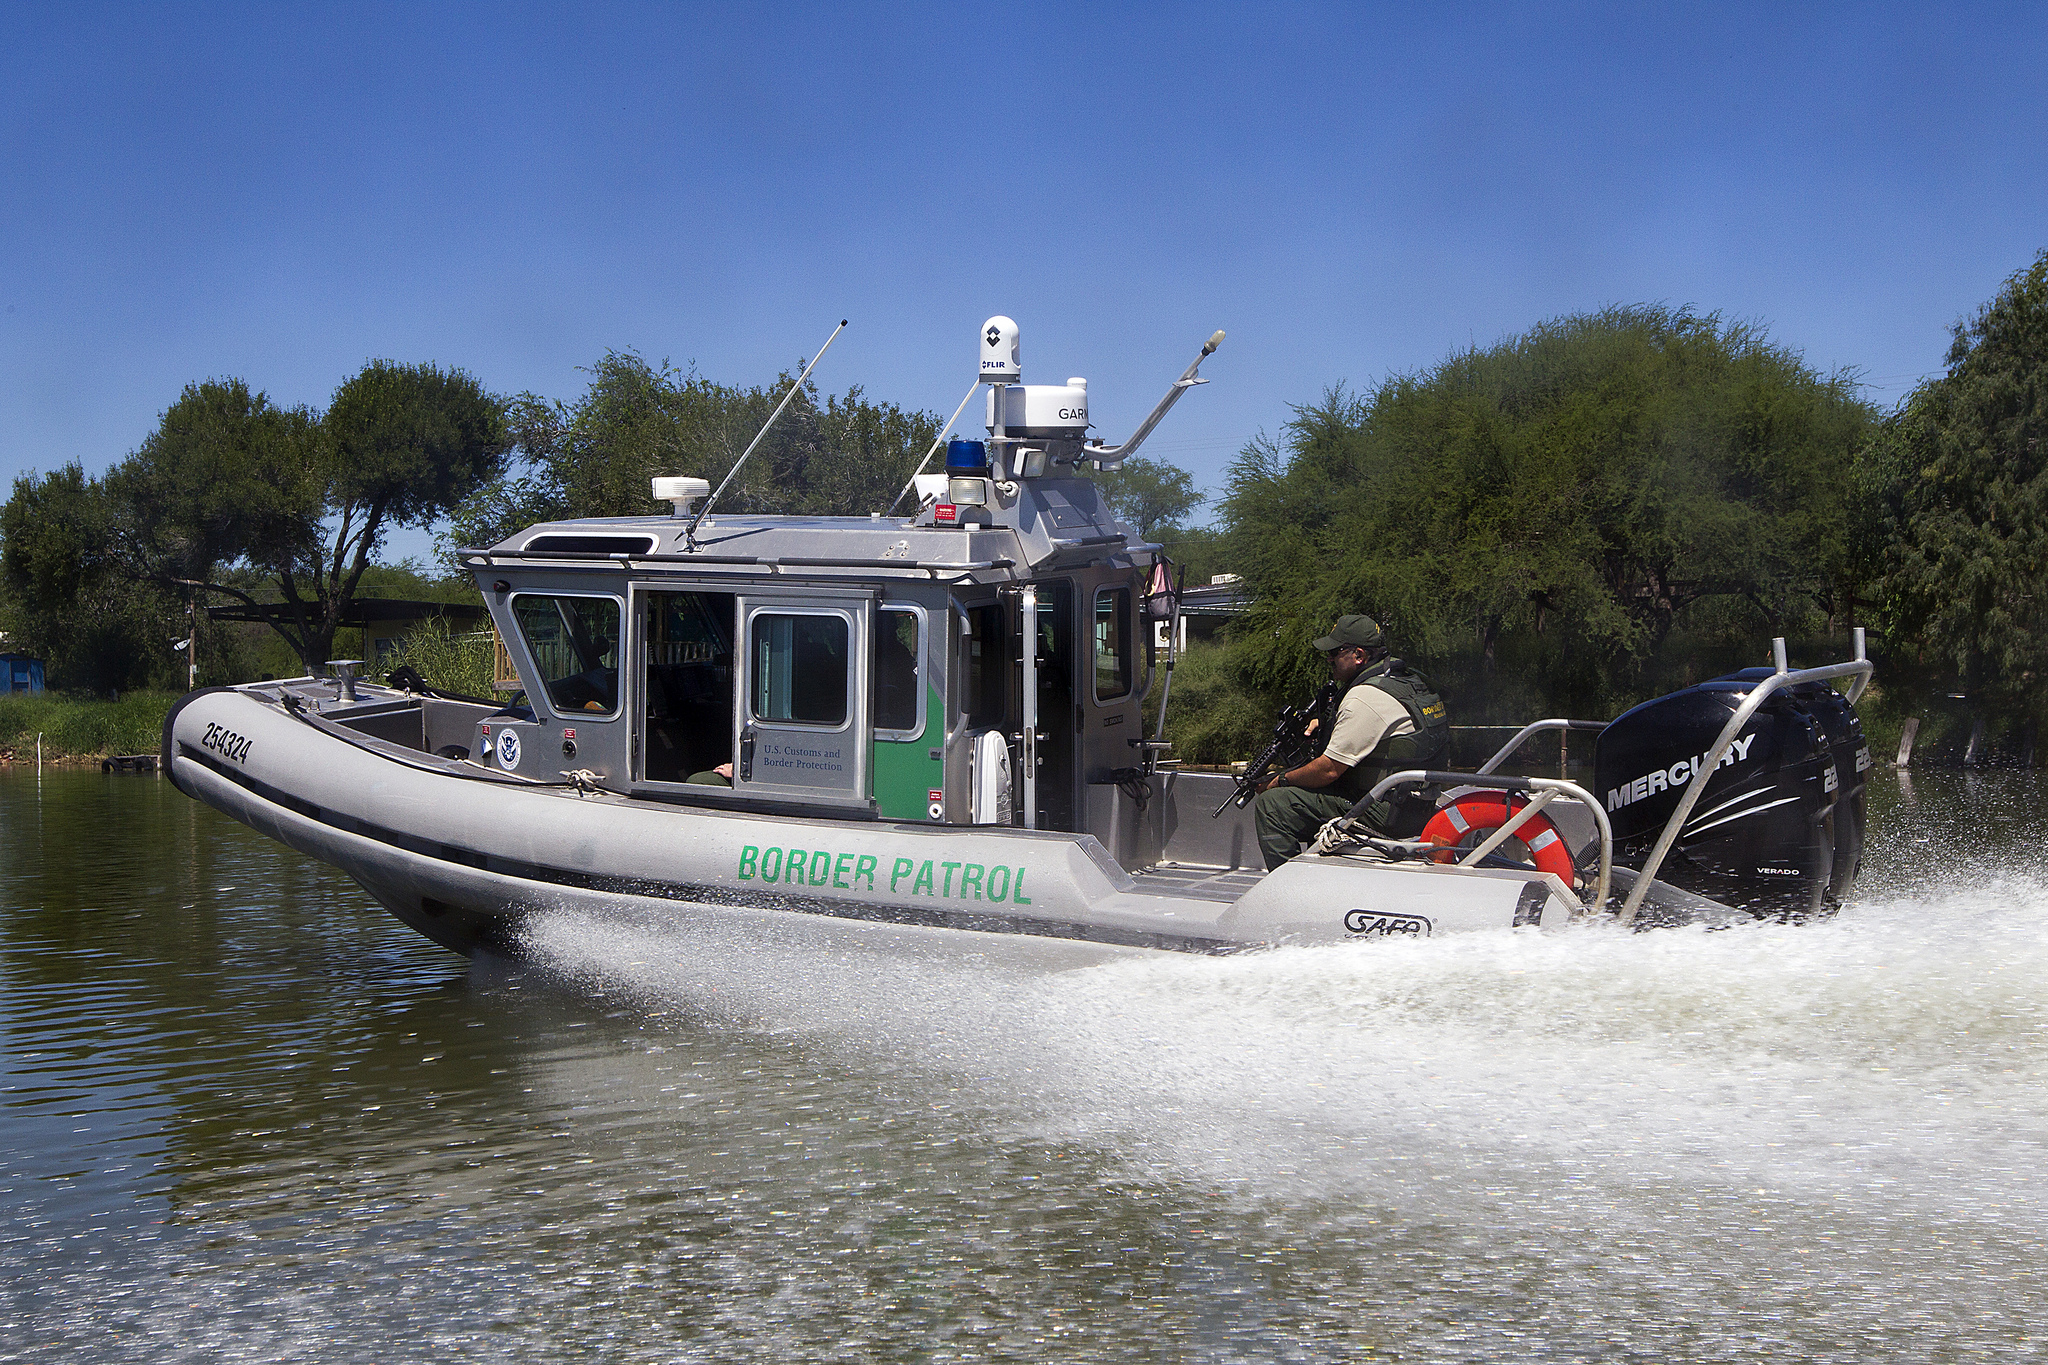 A Safe Boat patrols the river